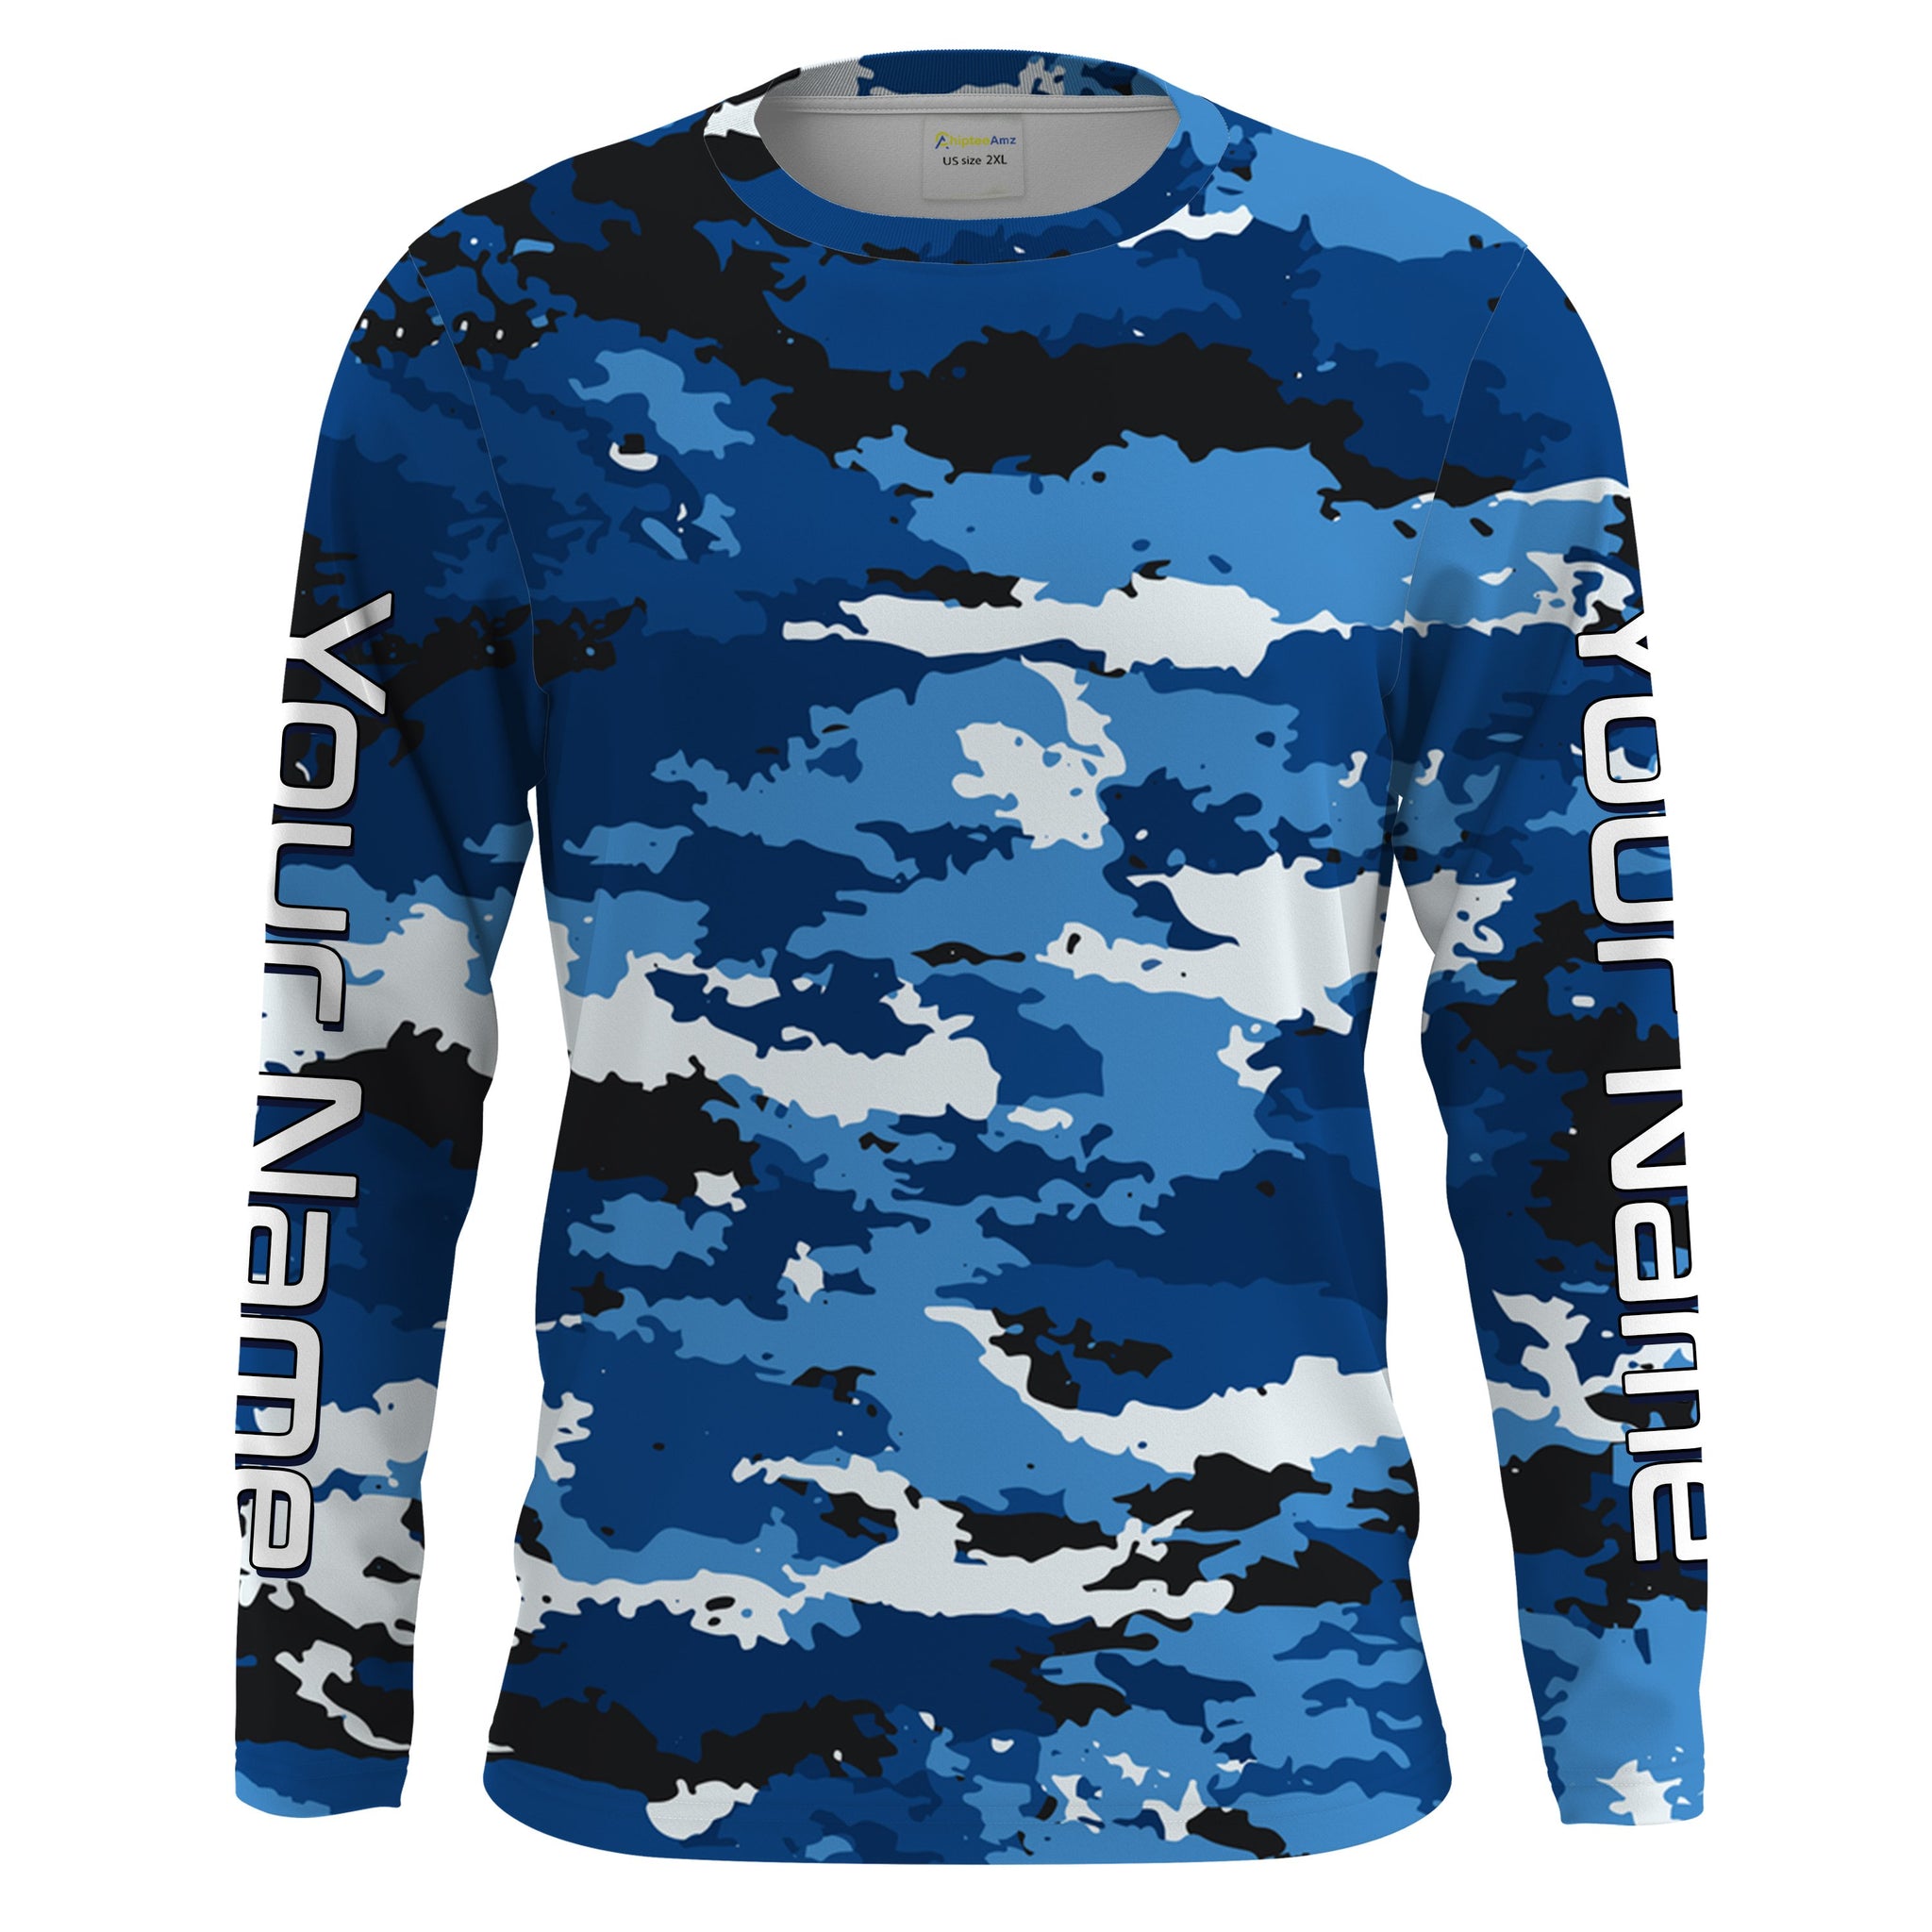 Personalized blue tie dye Long sleeve performance Fishing Shirts, Fish –  Myfihu